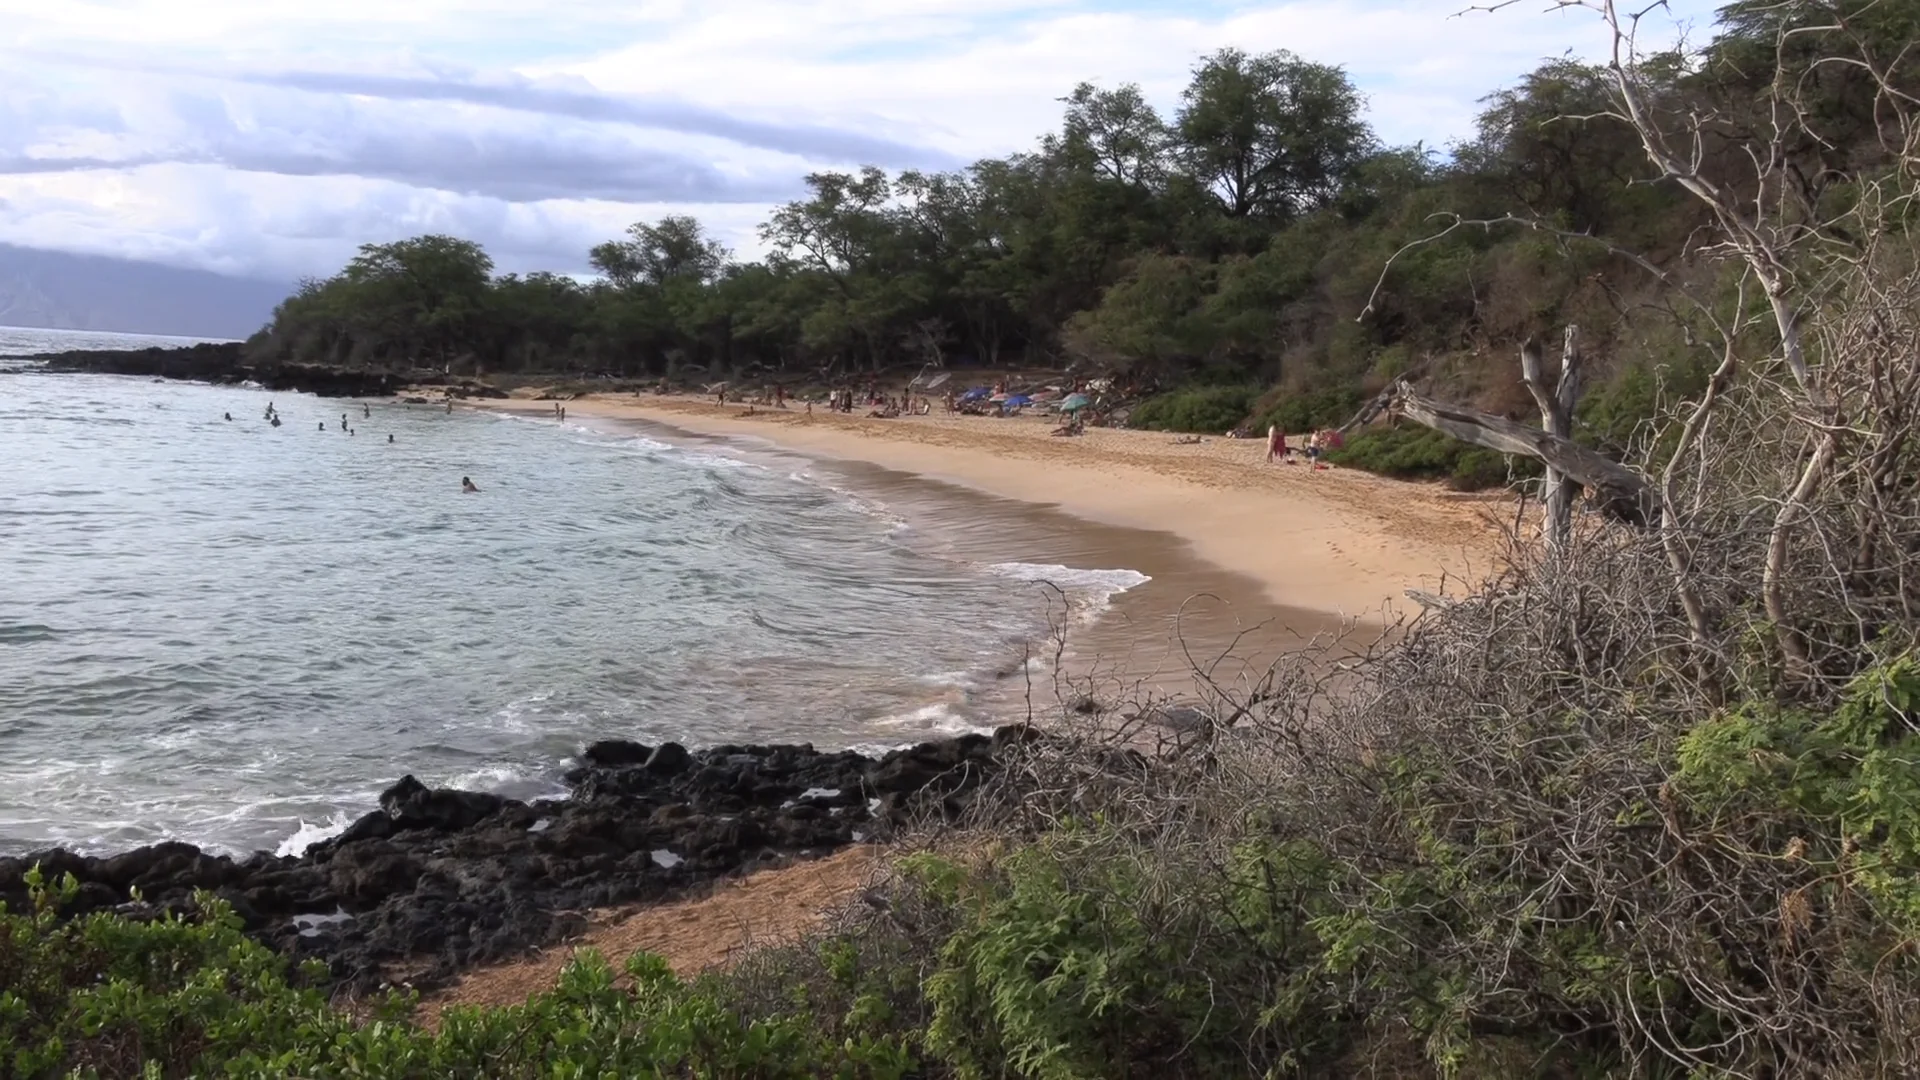 brad sheldrake recommends little beach maui pics pic